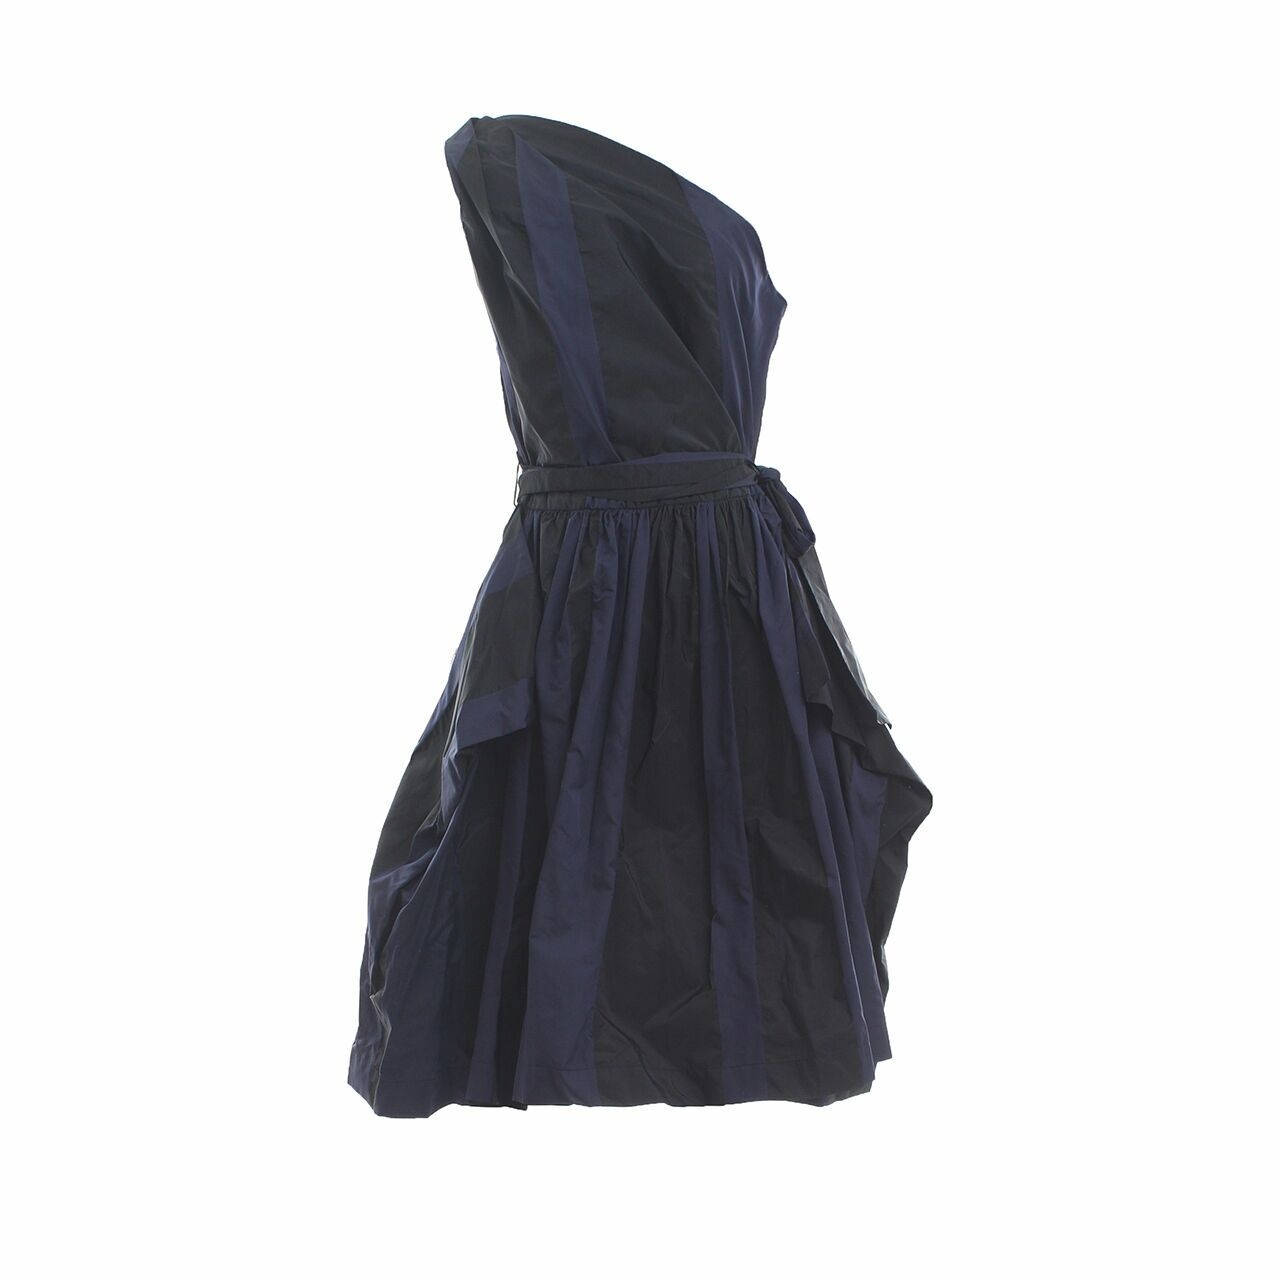 Vivienne Westwood Anglomania Black & Navy Midi Dress